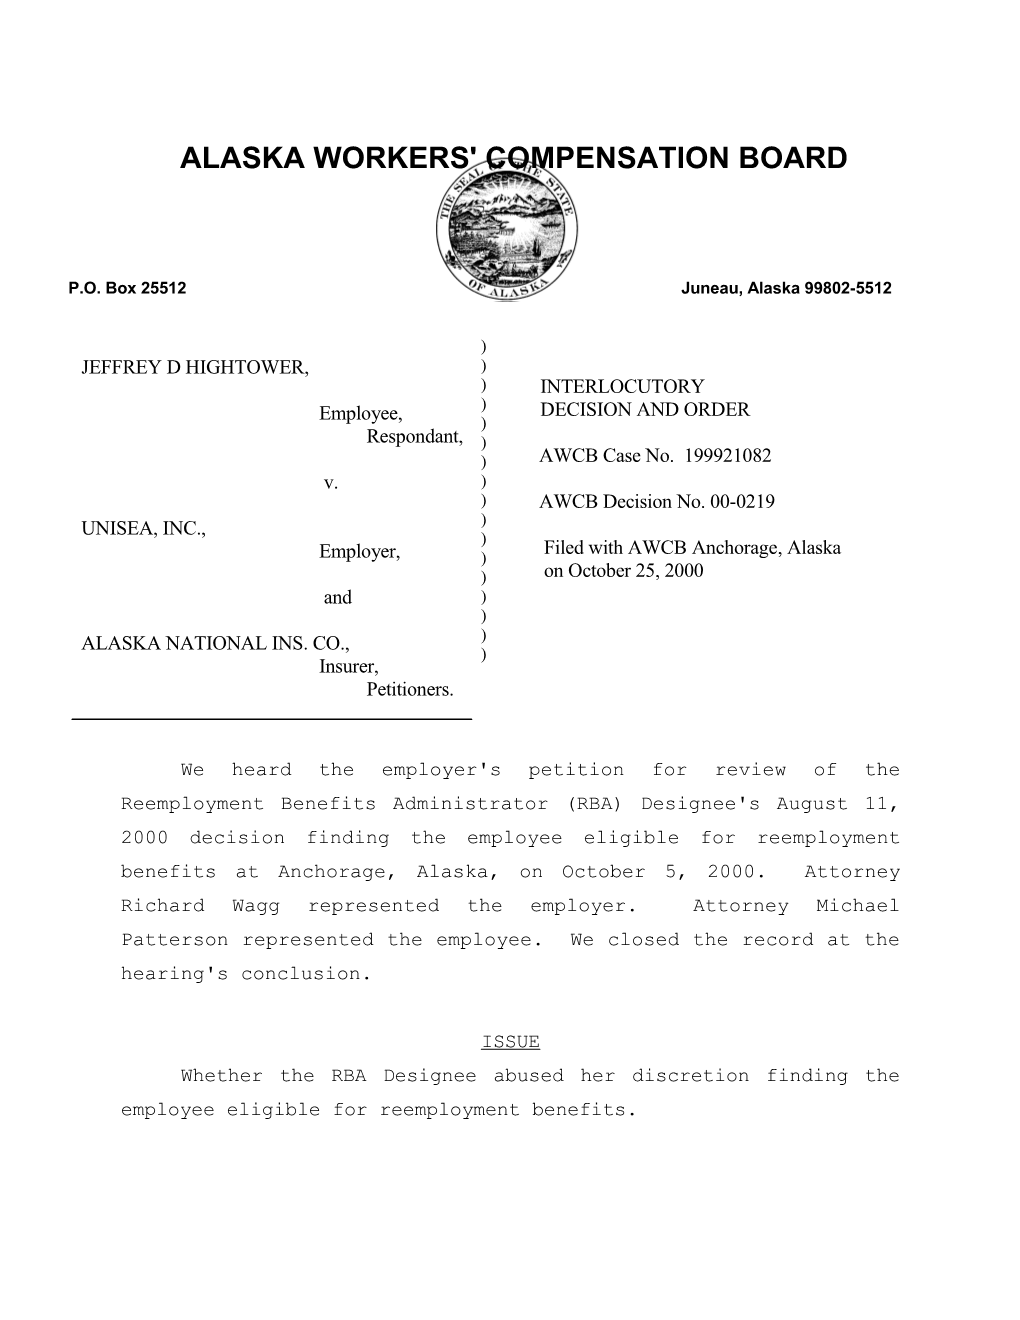 Alaska Workers' Compensation Board s57